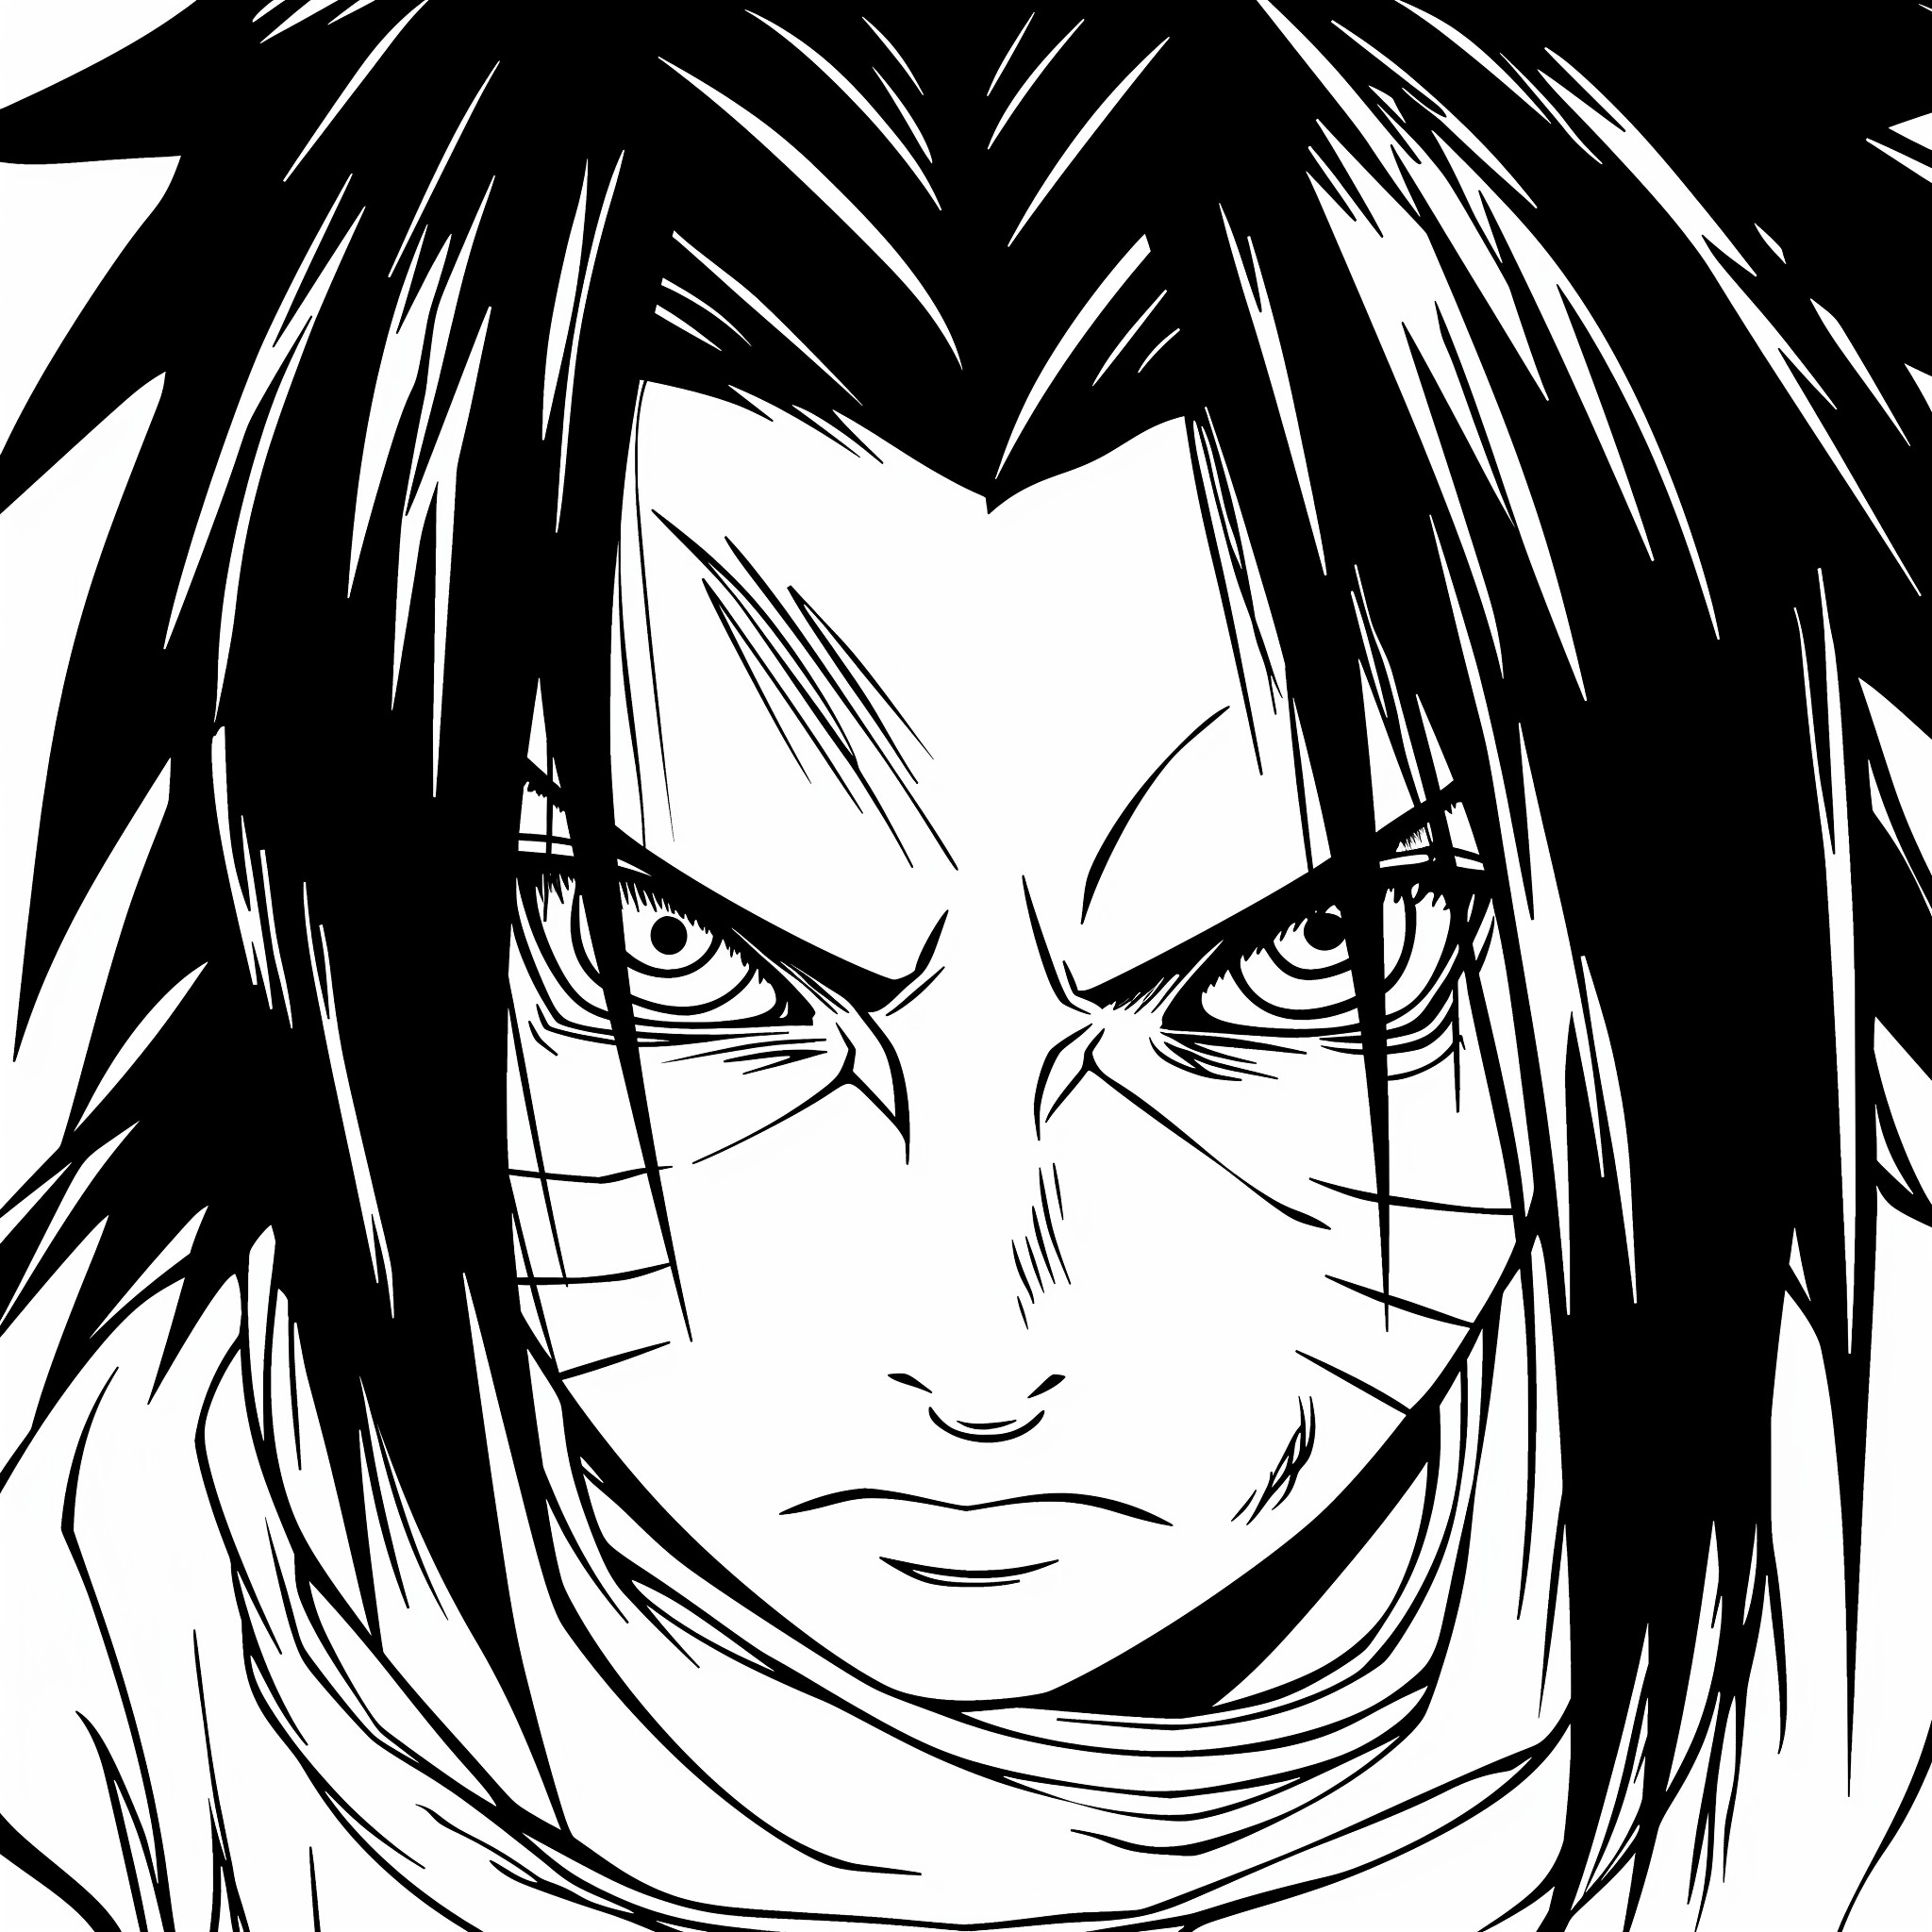 Kolorowanki Sasuke Uchiha 05 Naruto à do wydrukowania i pokolorowania